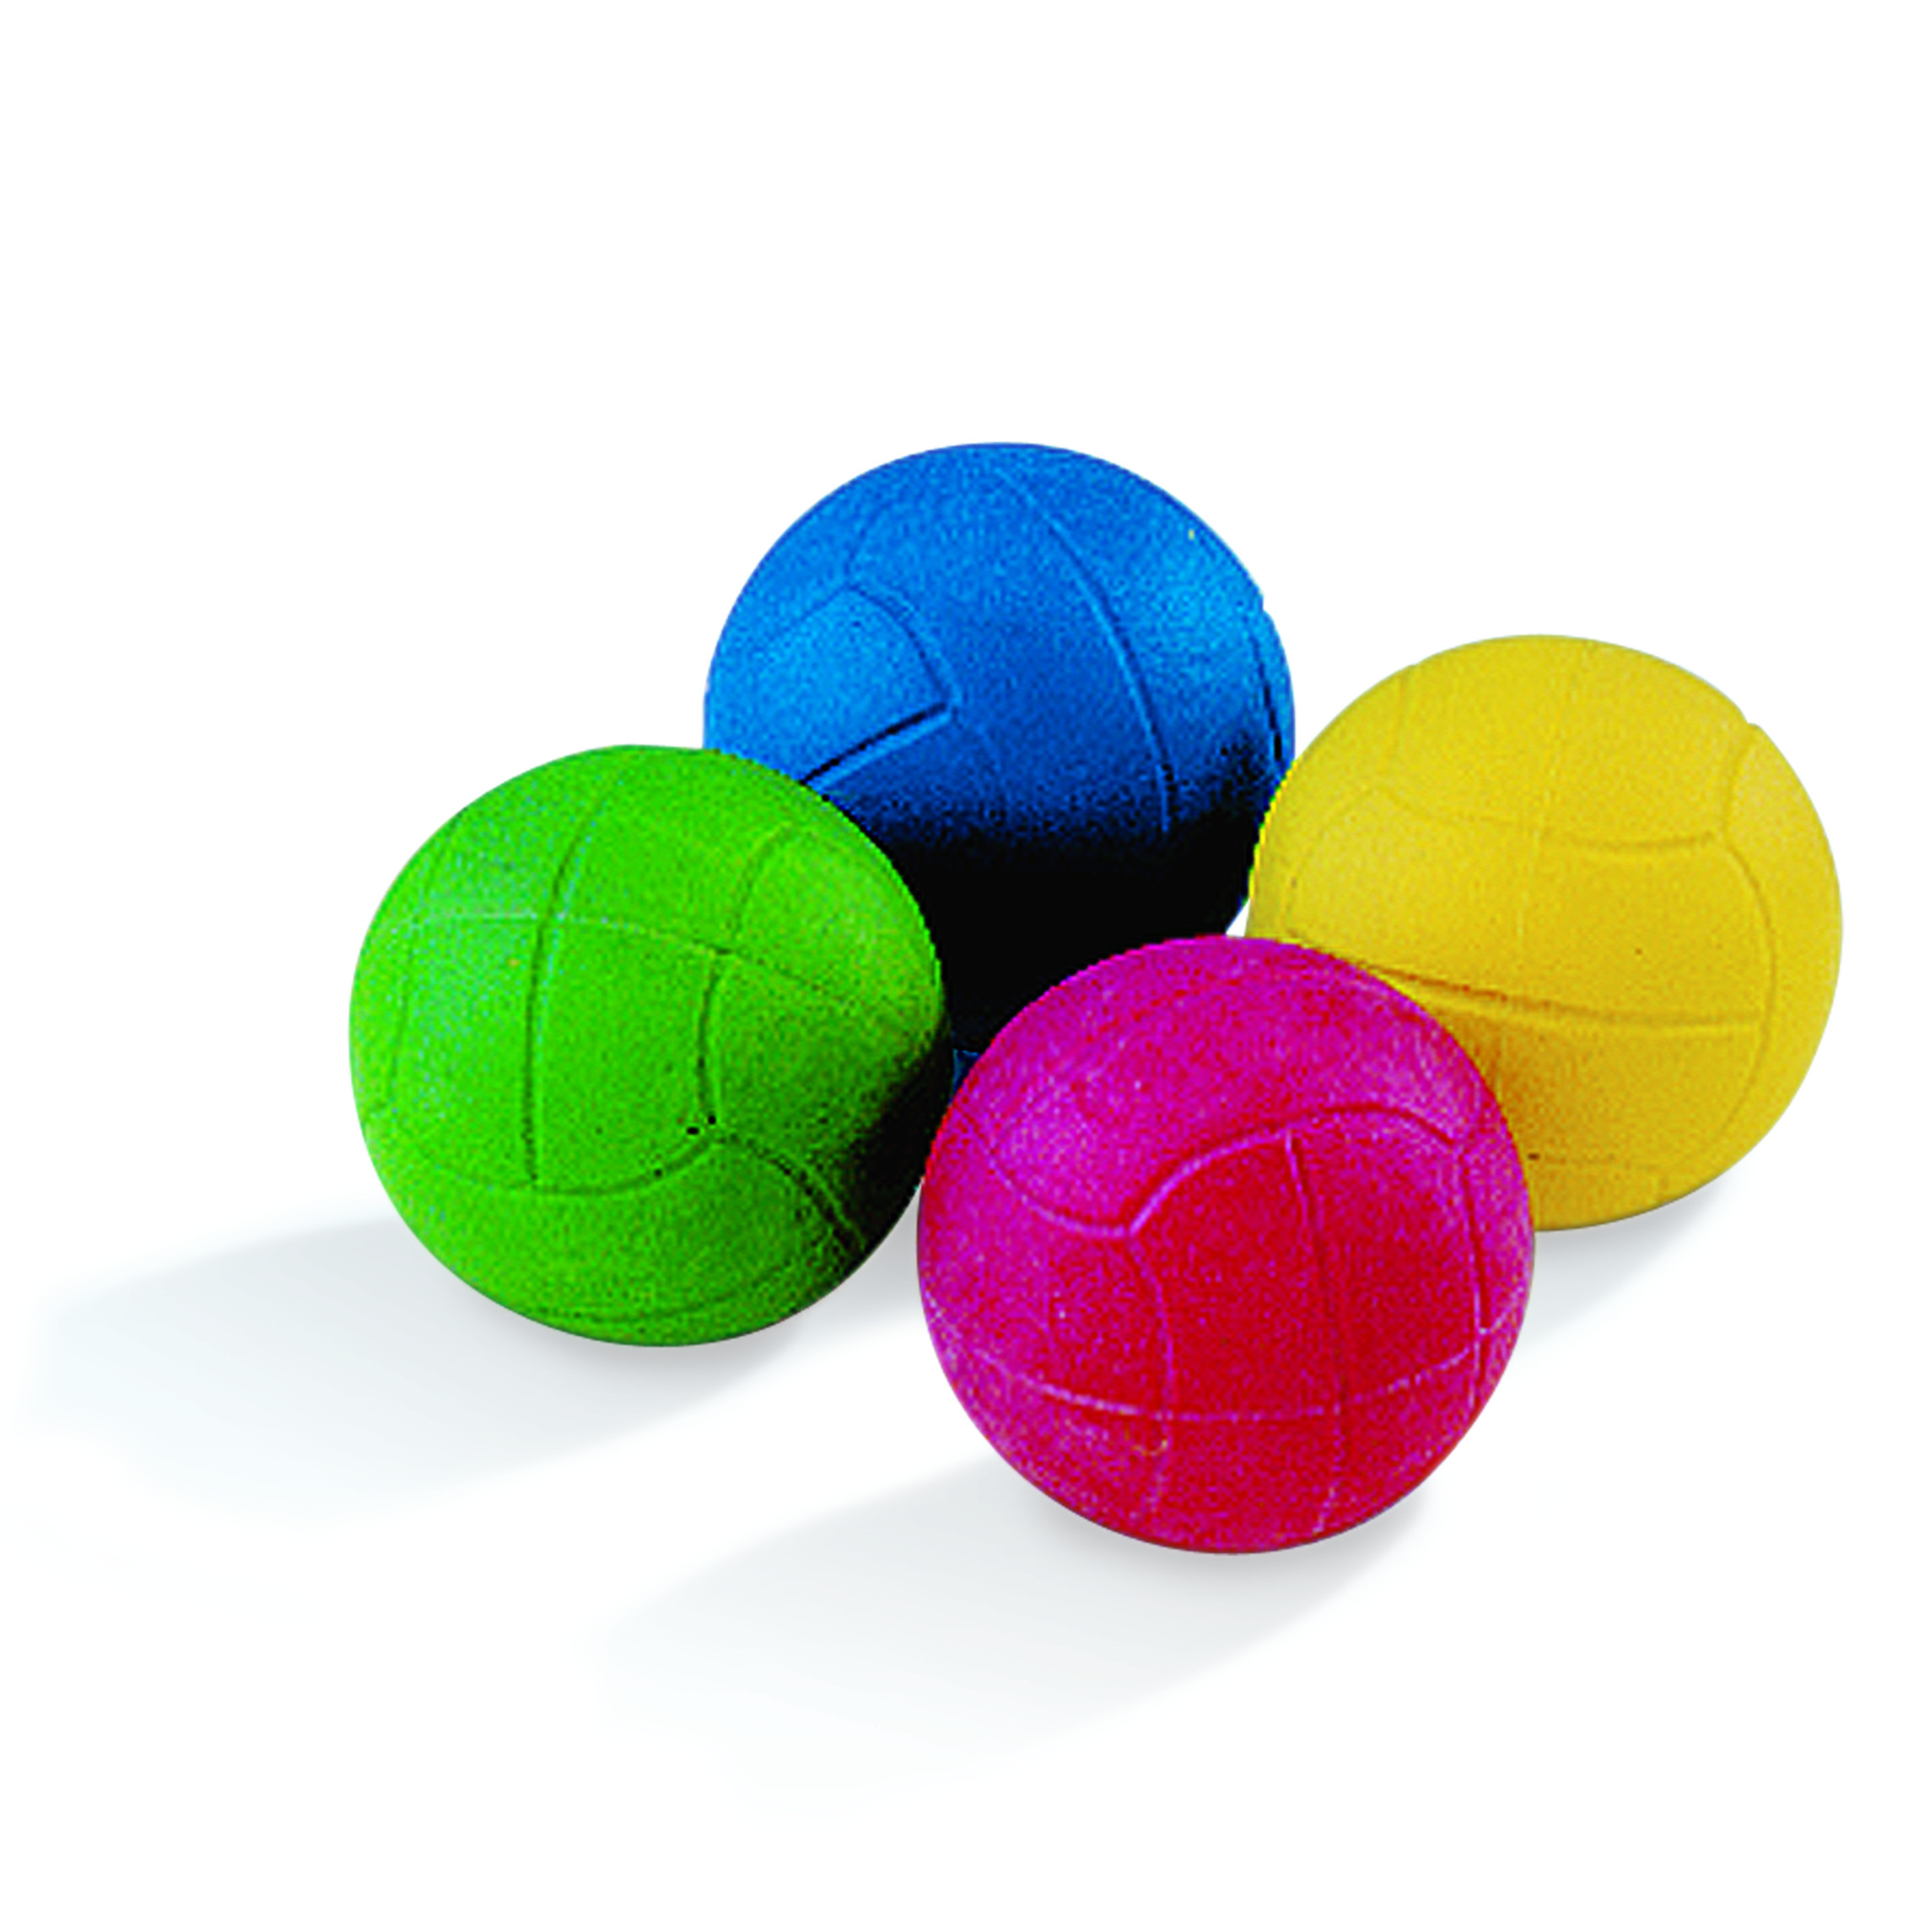 Spongy rubber ball 62 mm